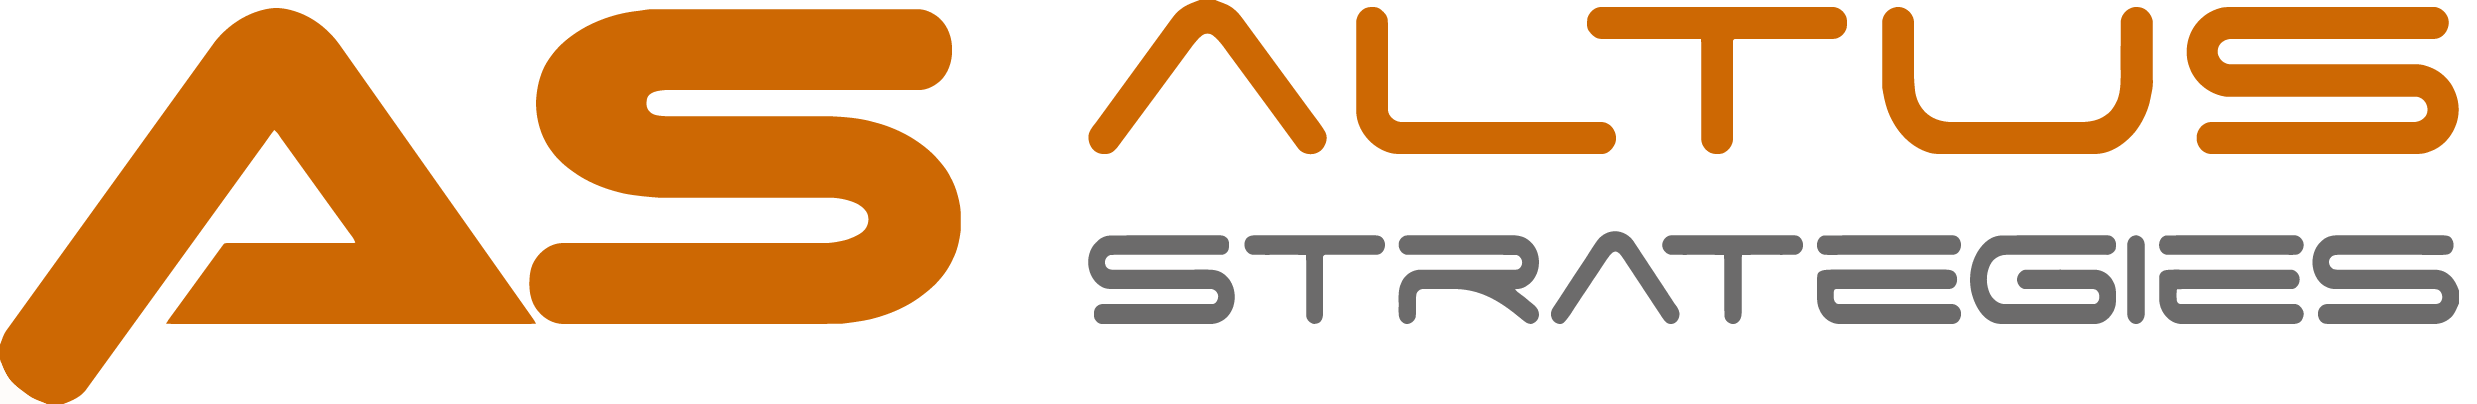 Altus Strategies Plc, Thursday, February 11, 2021, Press release picture